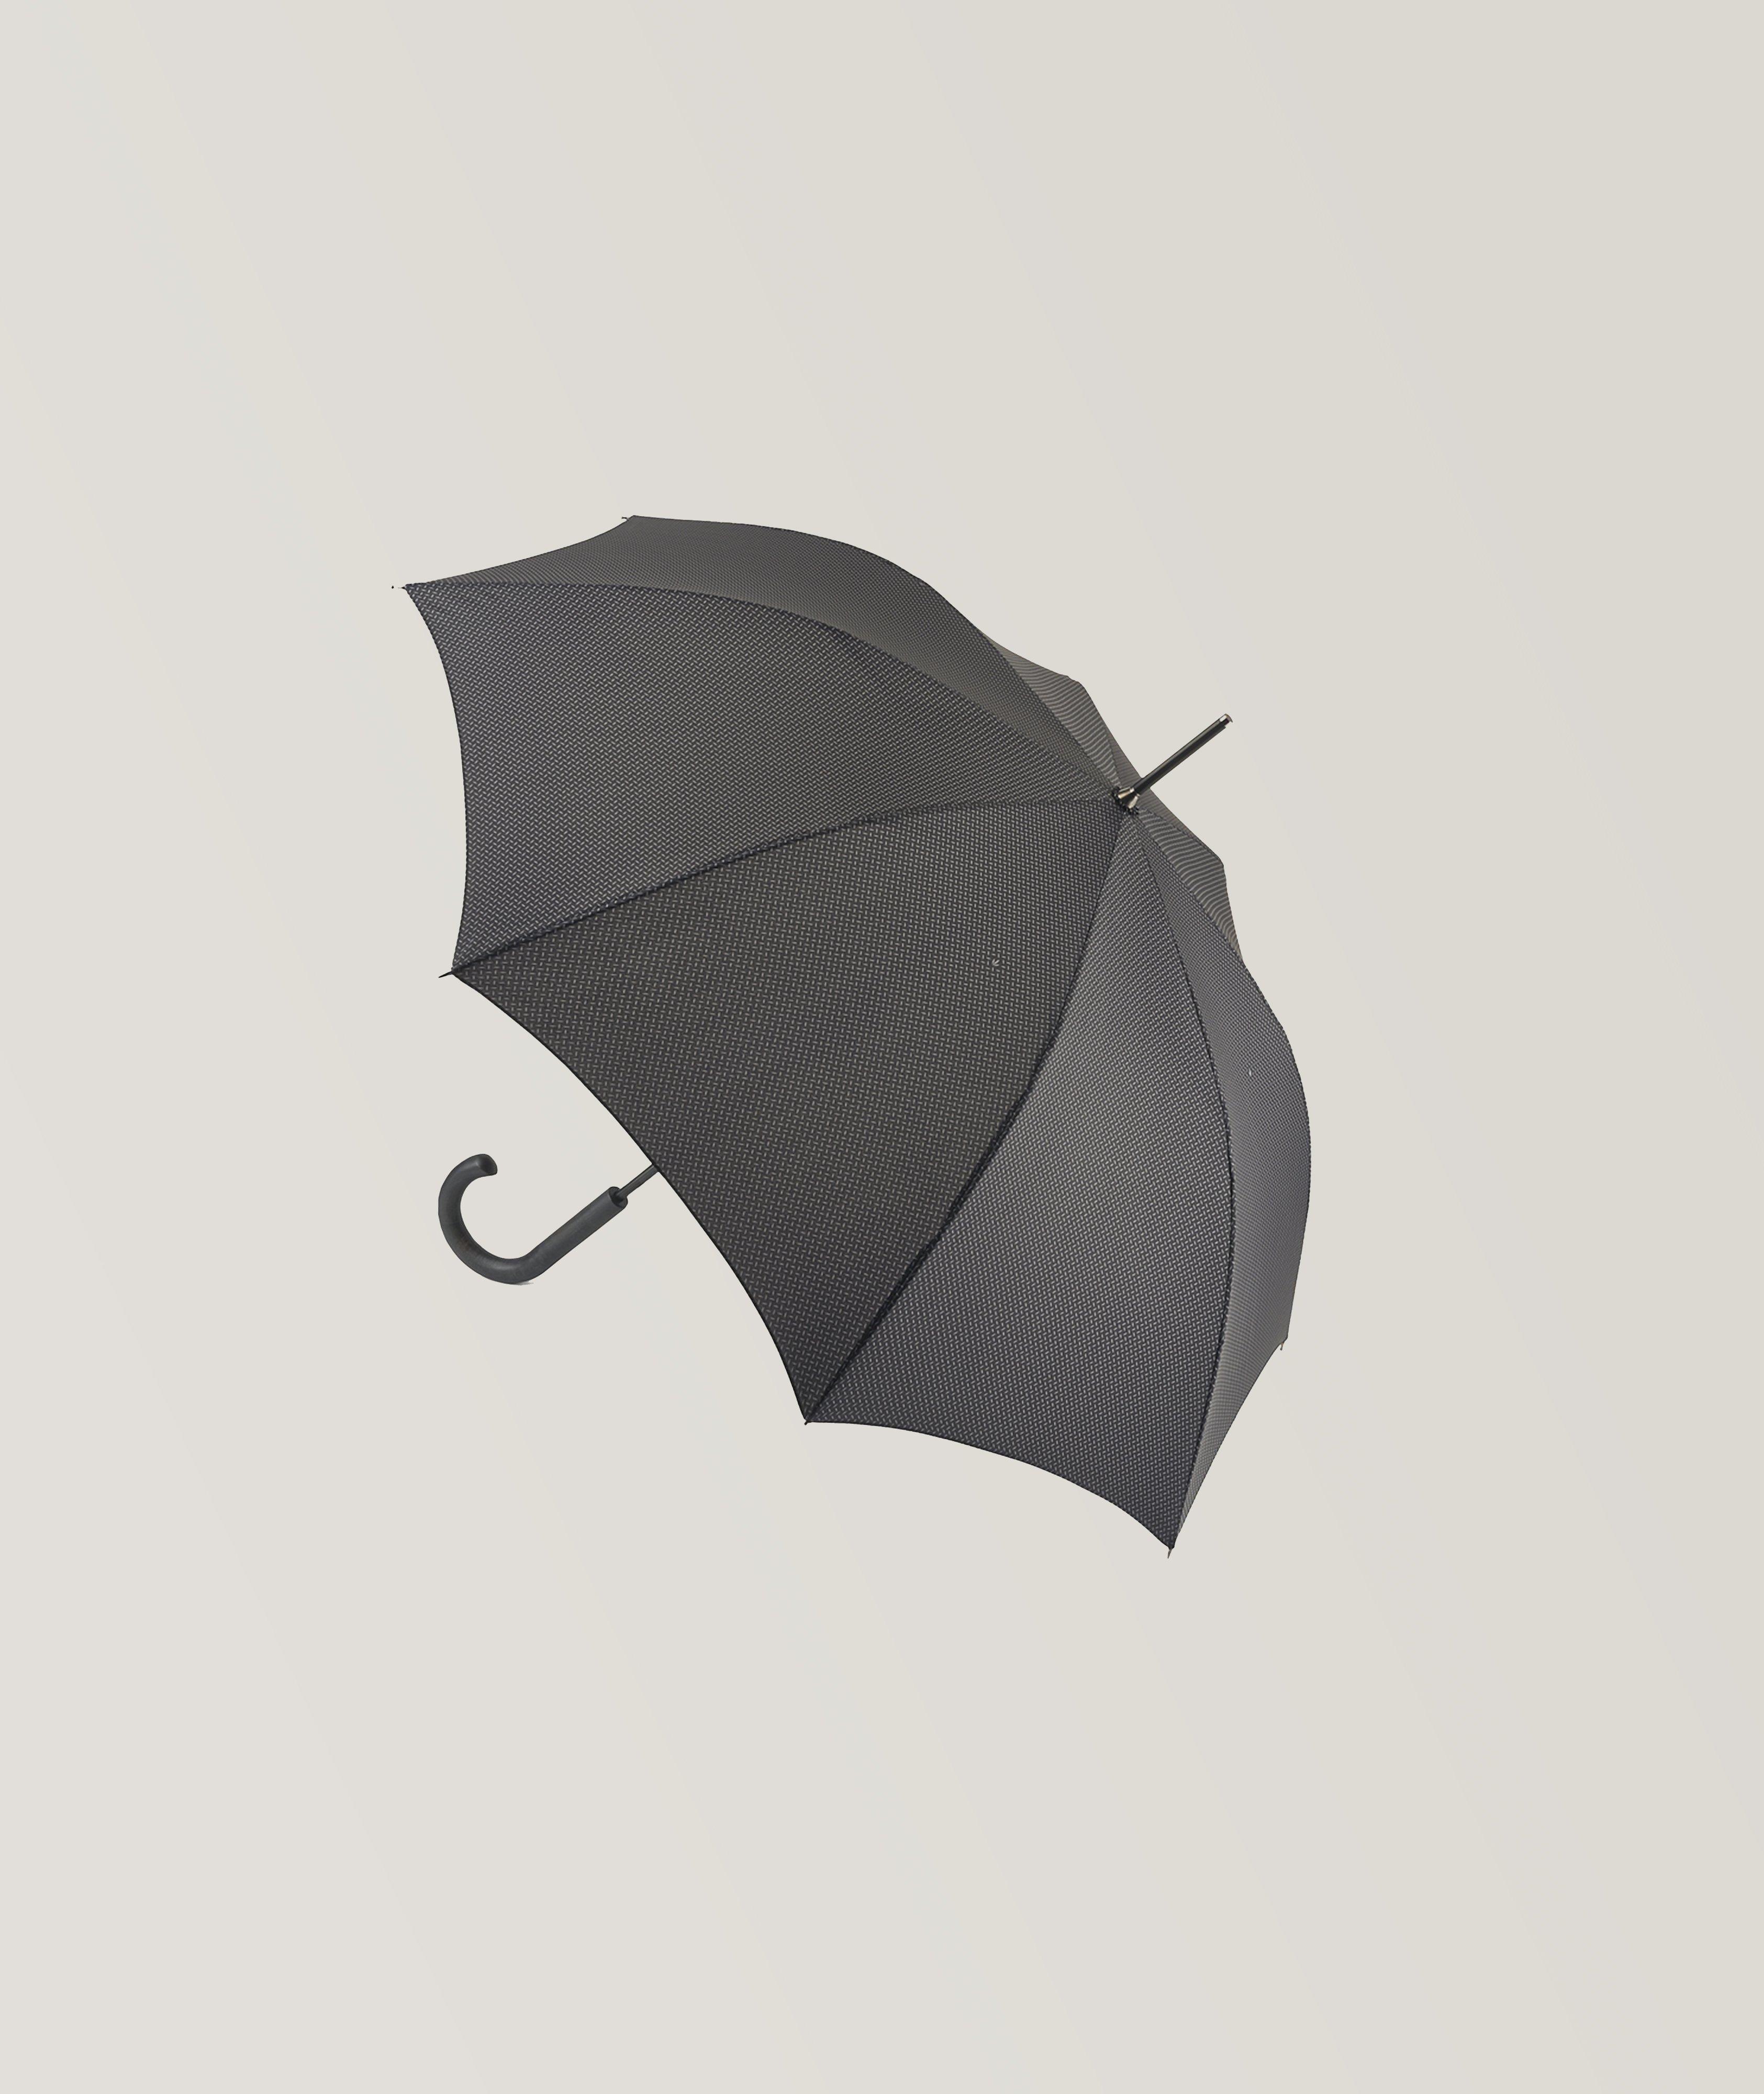 Parapluie, collection Diamond image 0